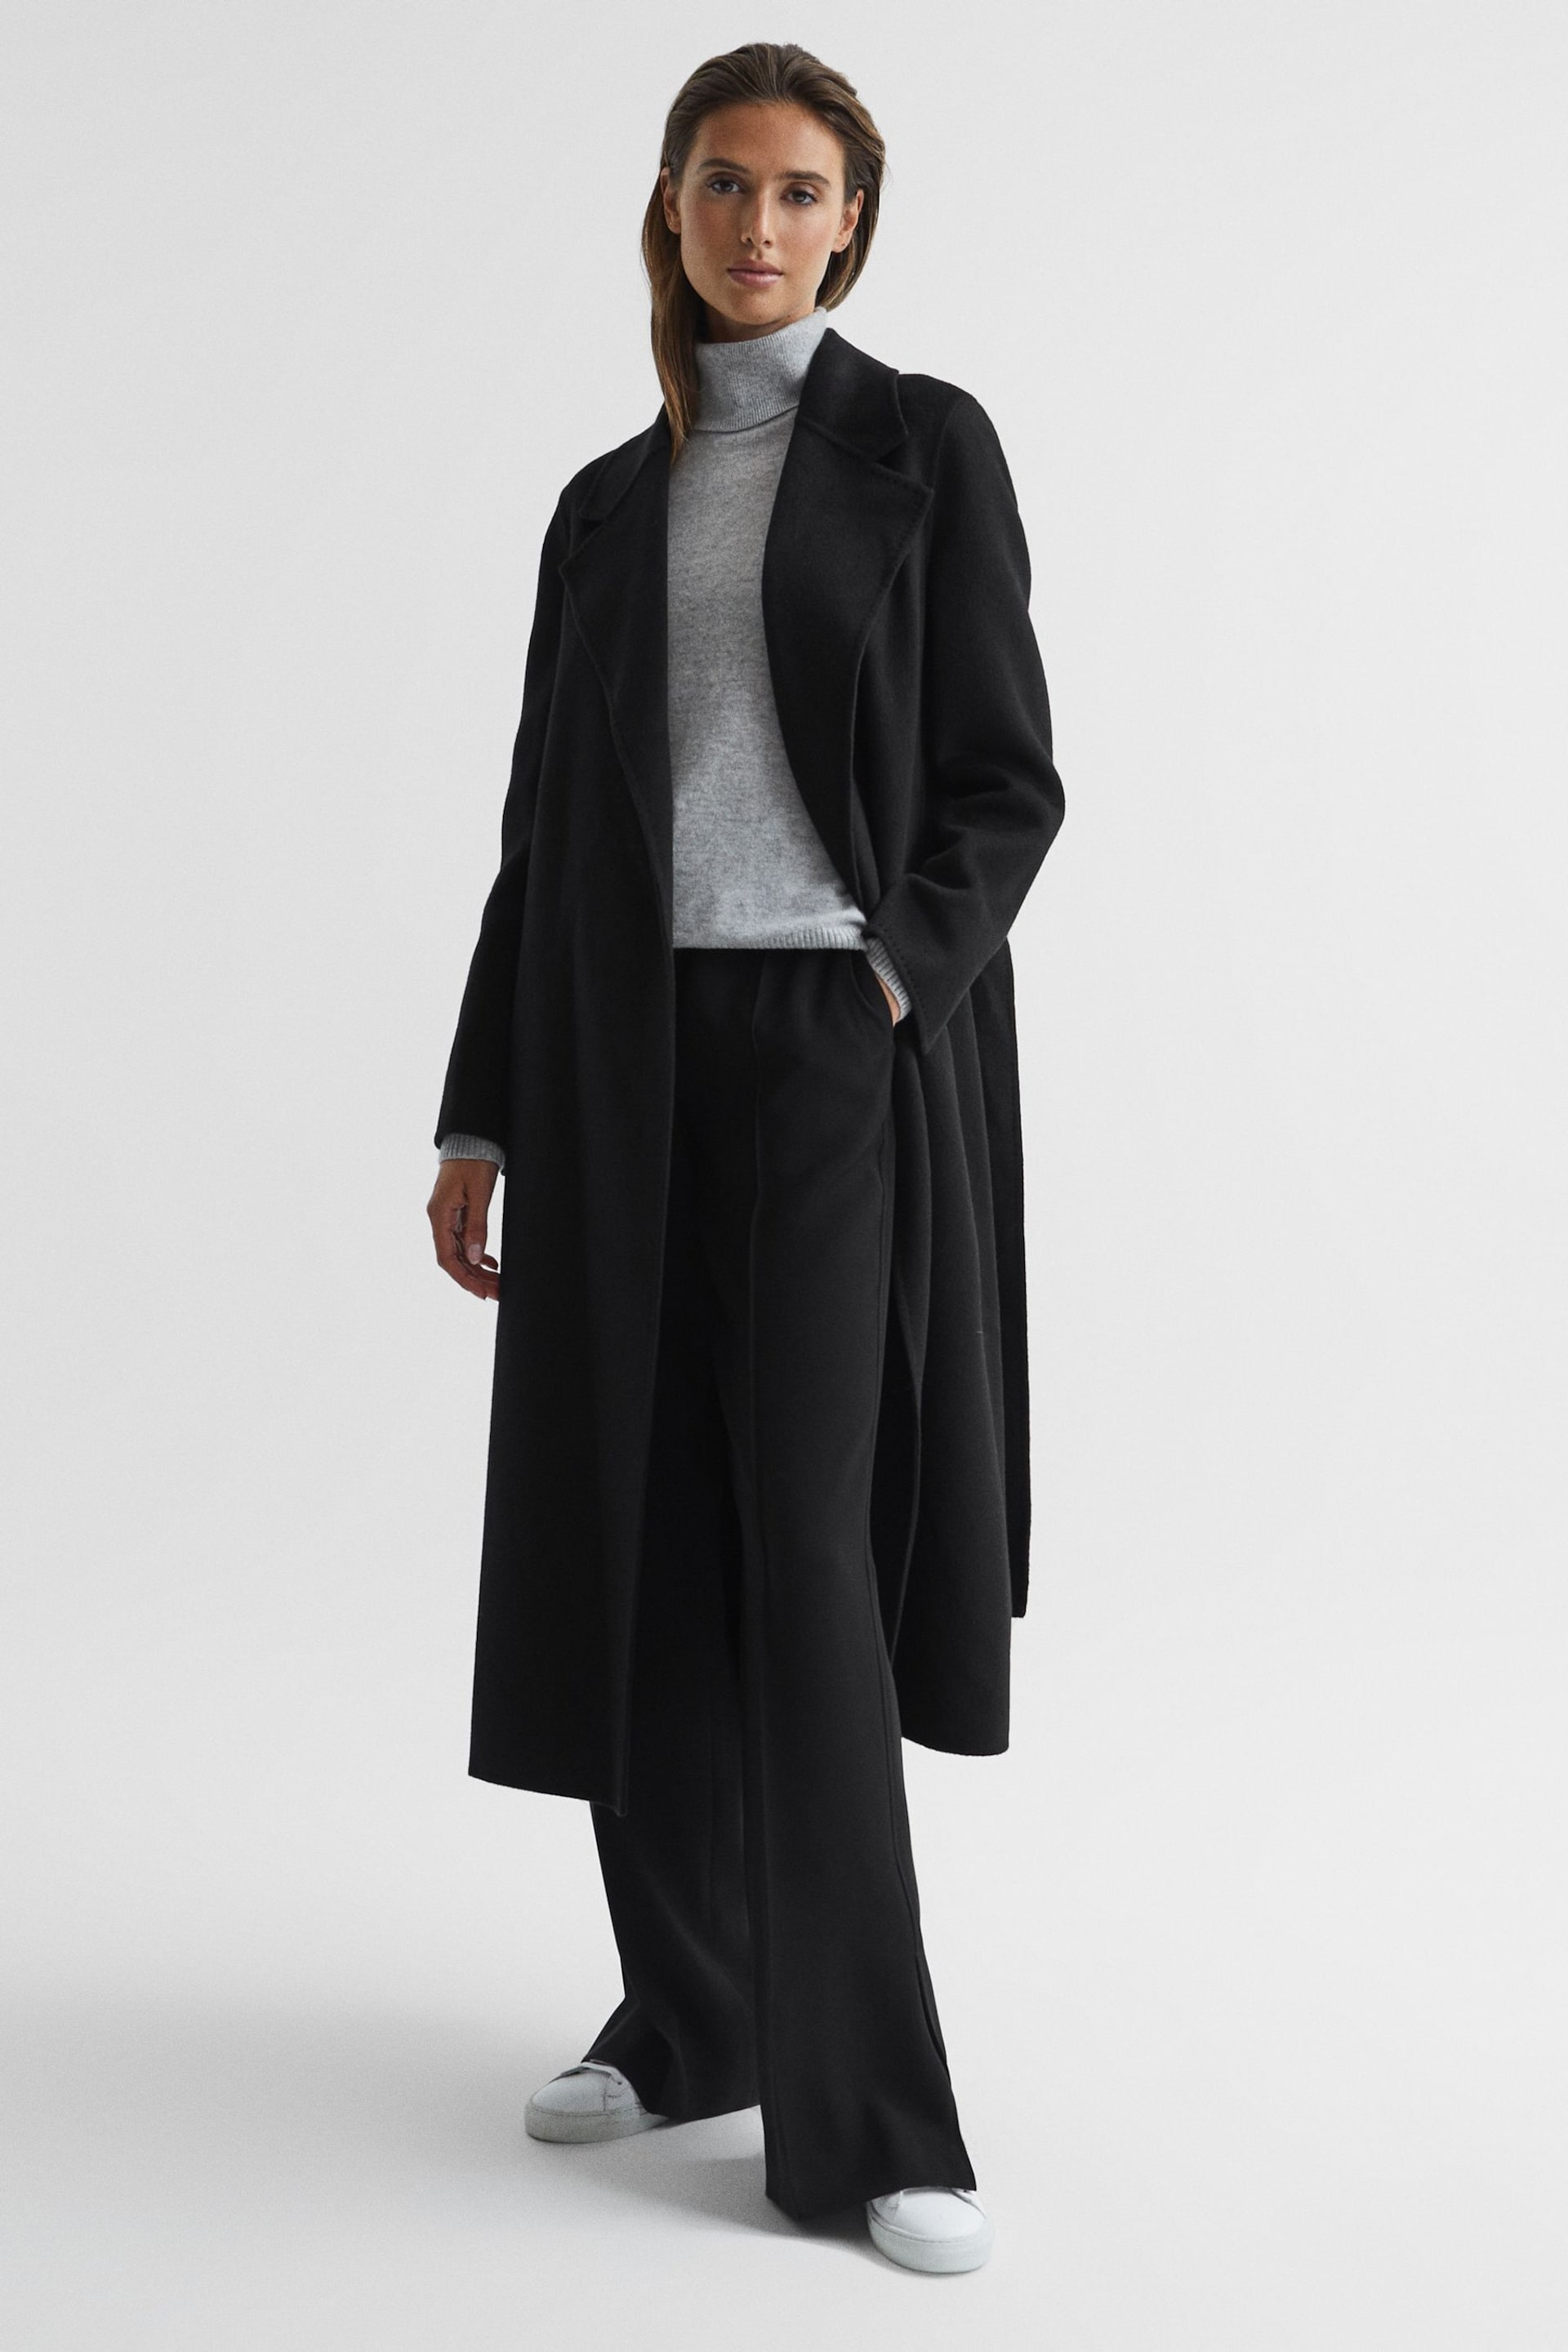 Reiss Black Honor 100% Cashmere Wool Blindseam Long Coat - Image 8 of 8